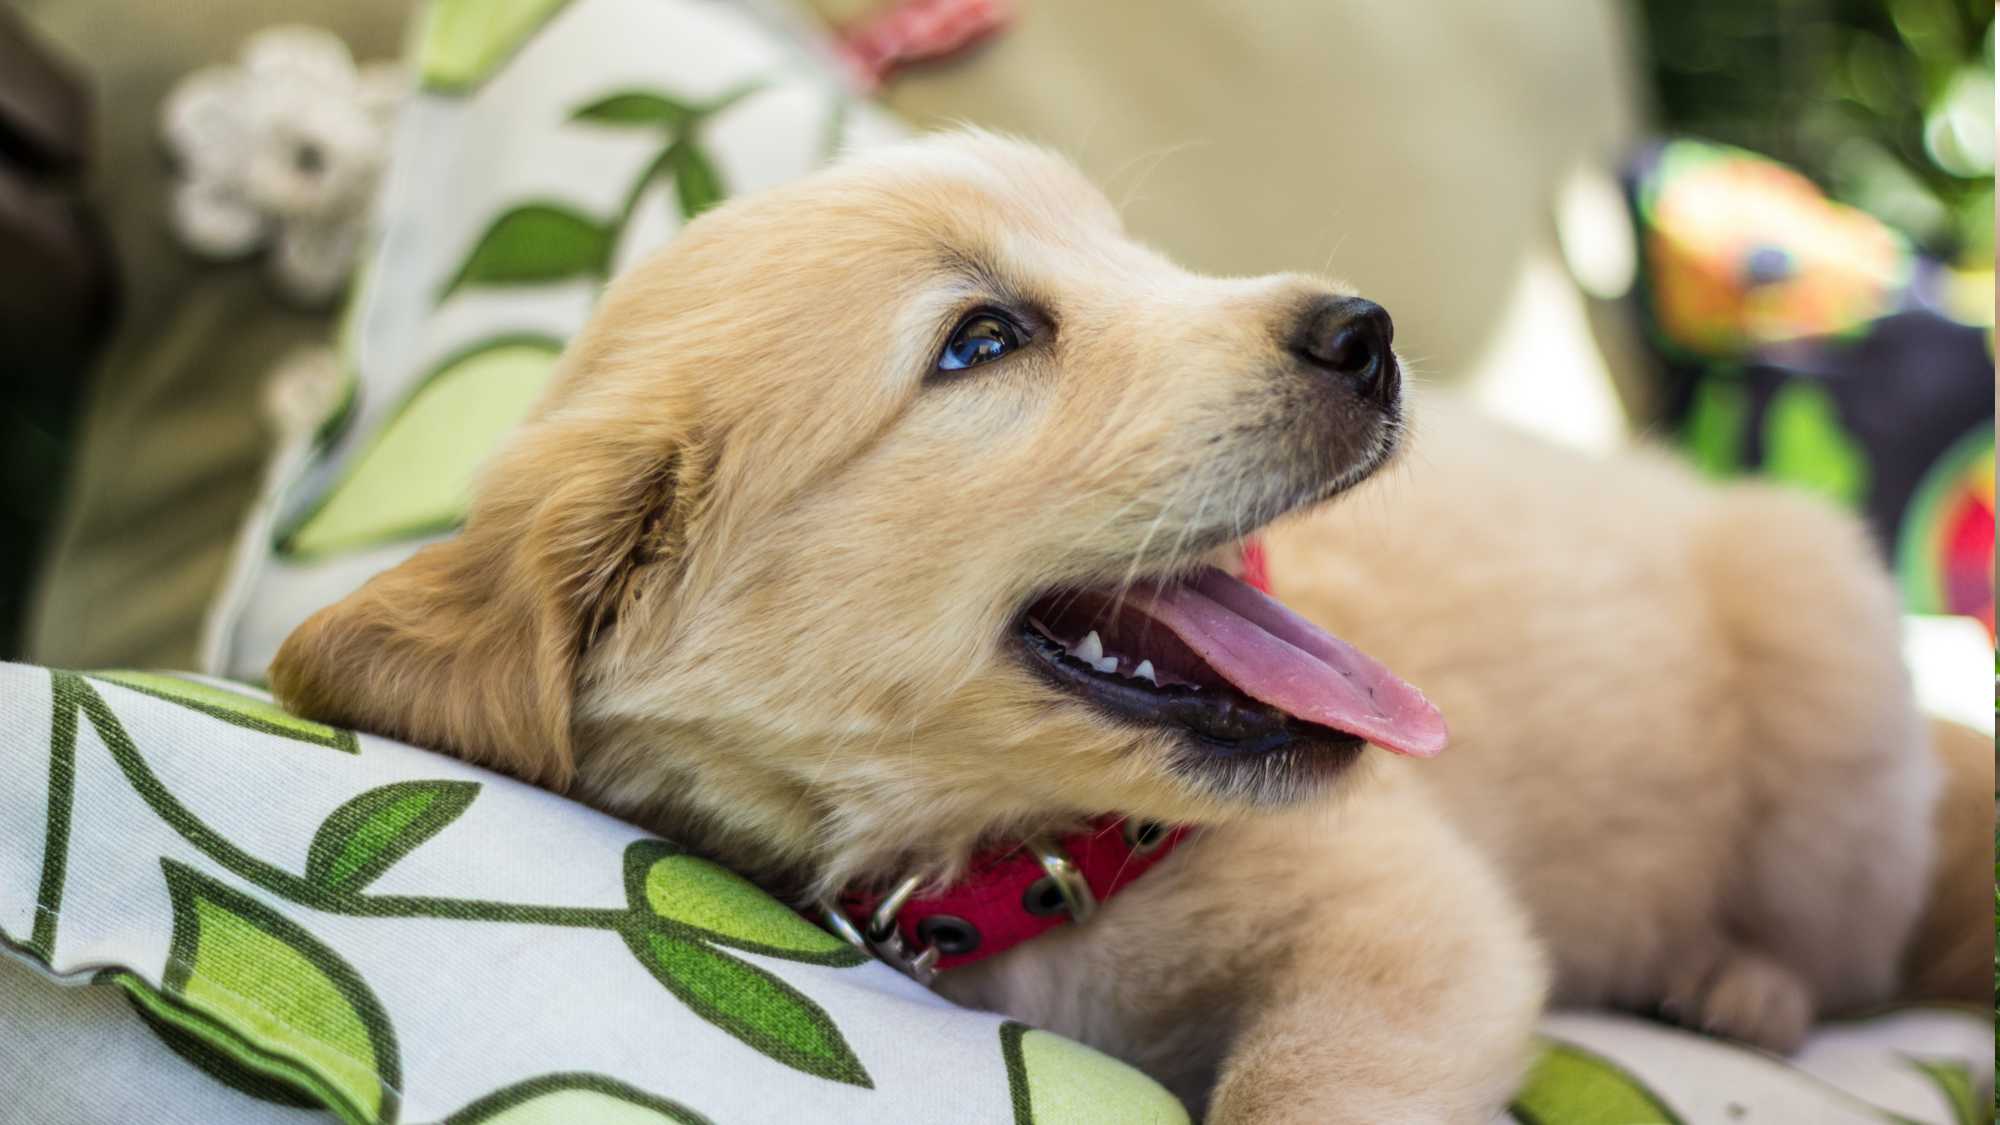 Playful pup on pillows